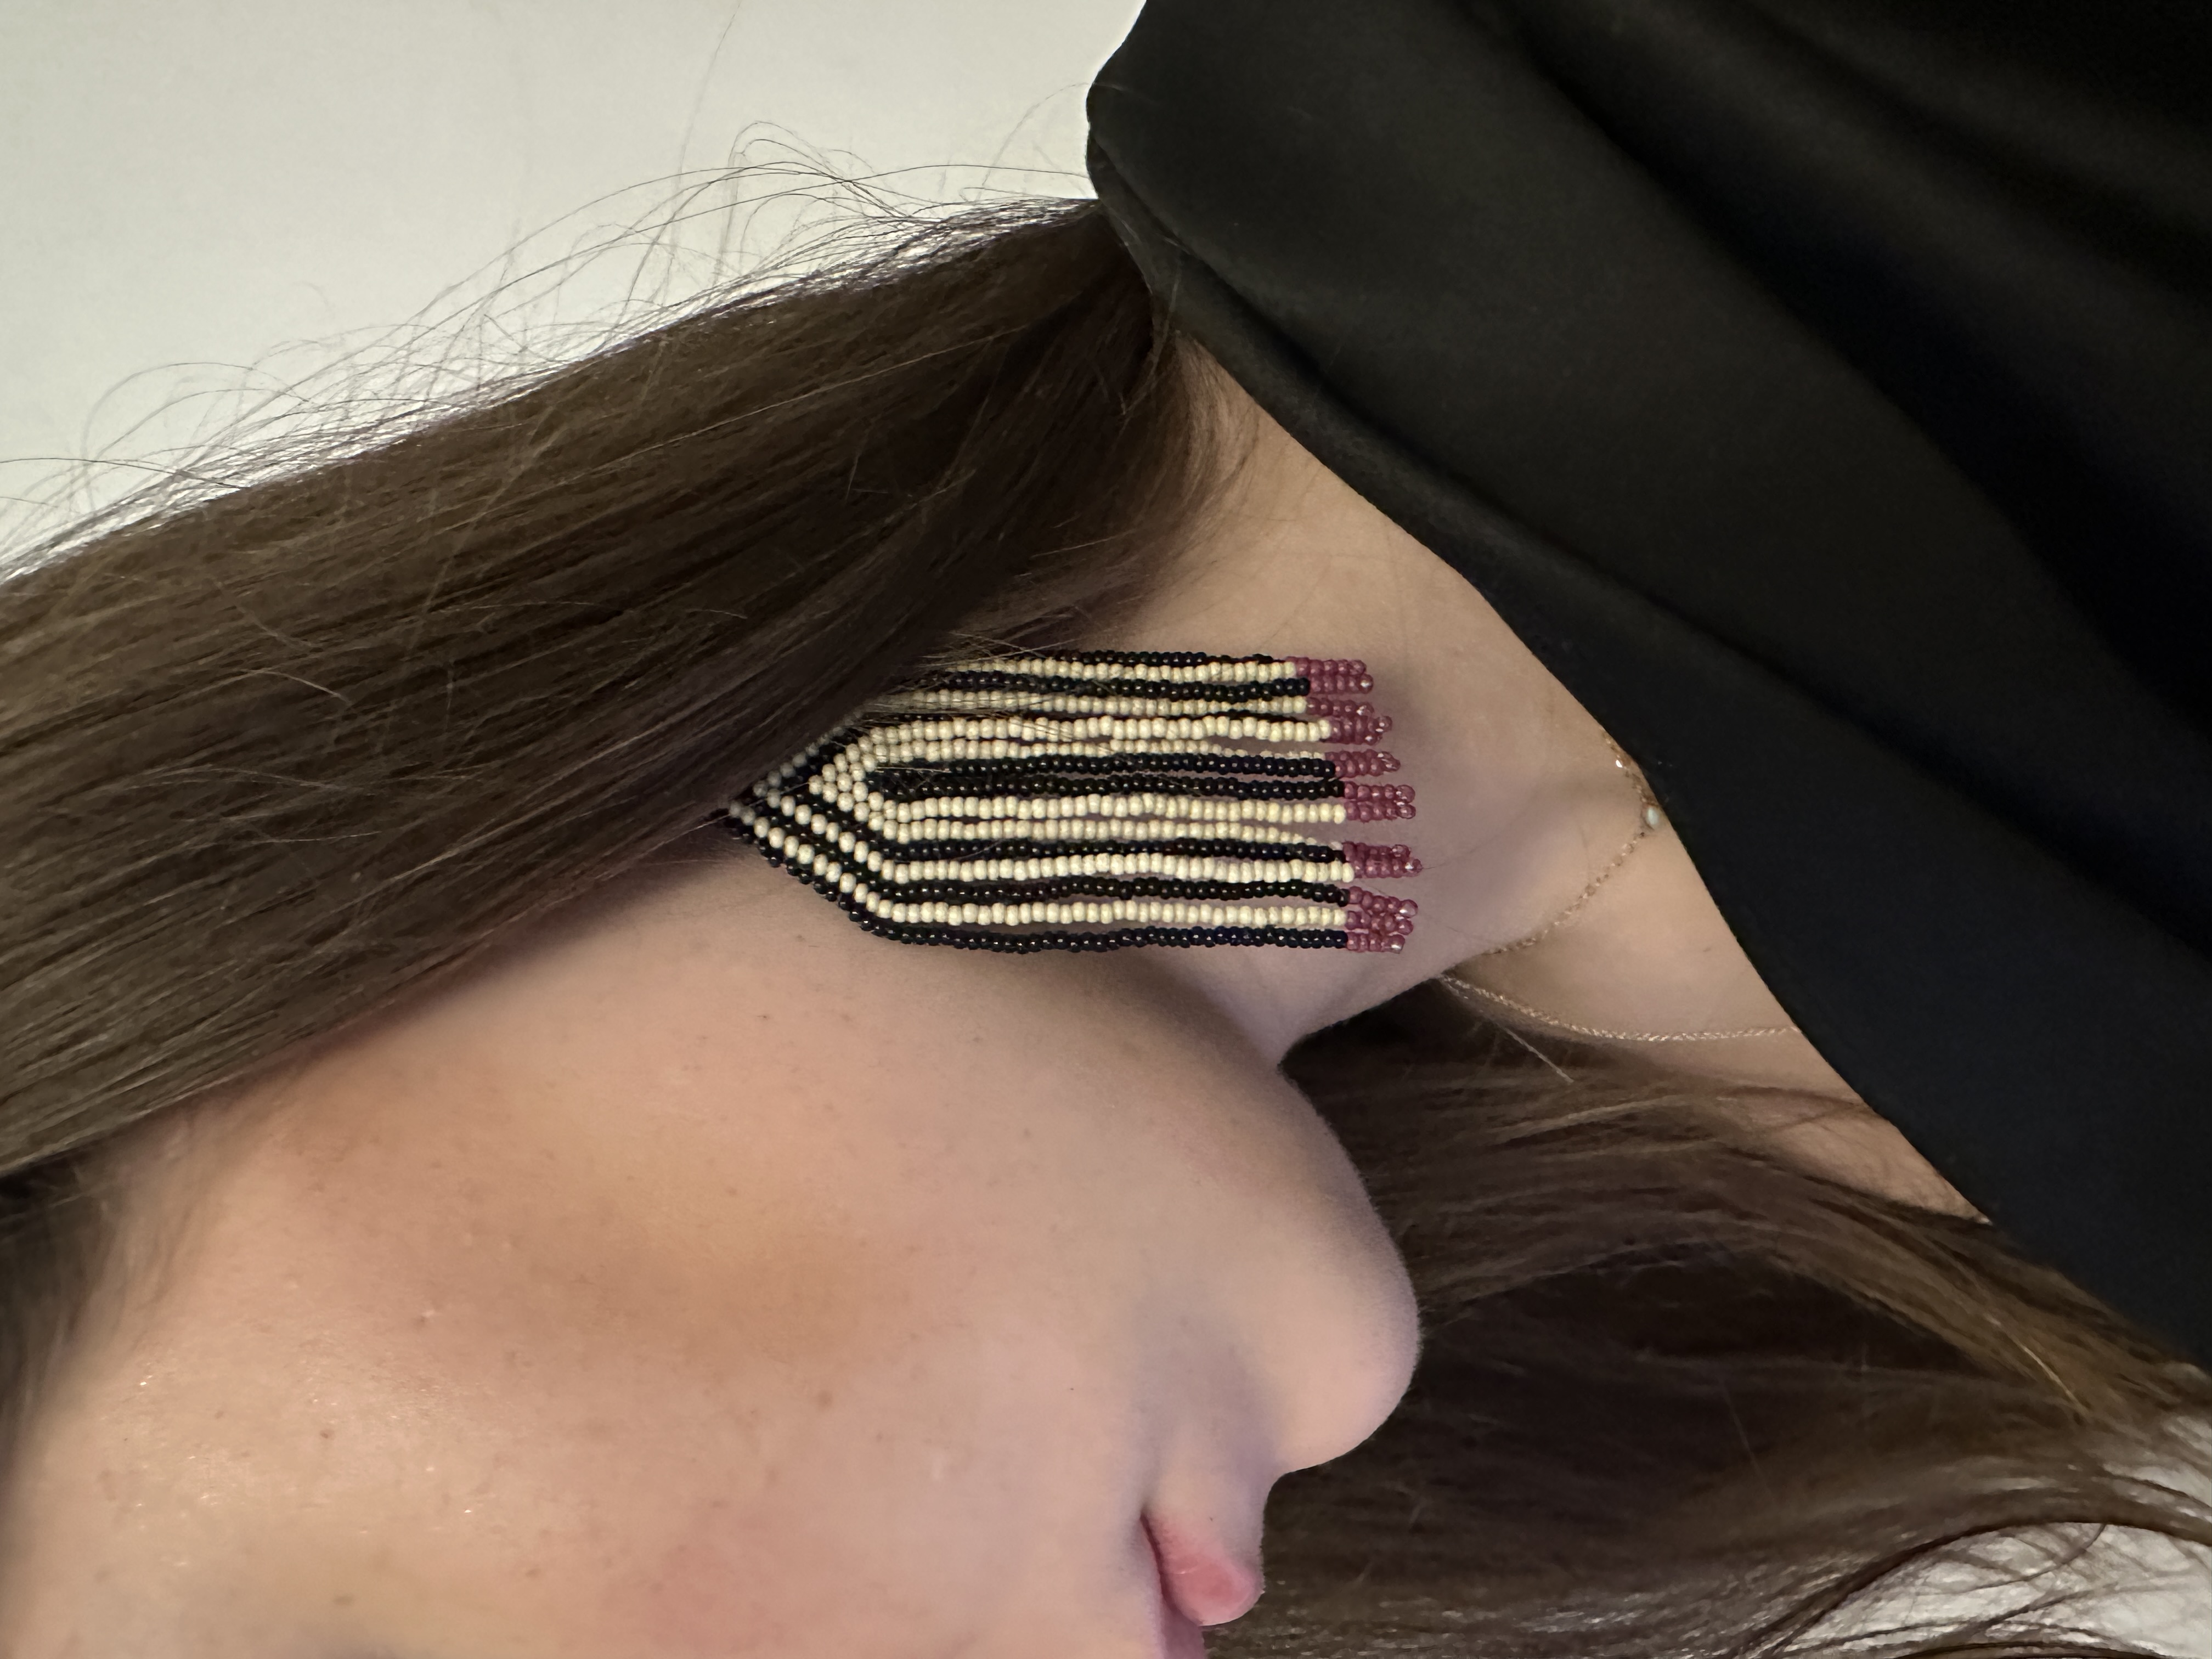 Joblot 10 items Boho Bohemian Earrings Seed Bead Handcrafted New Stripe